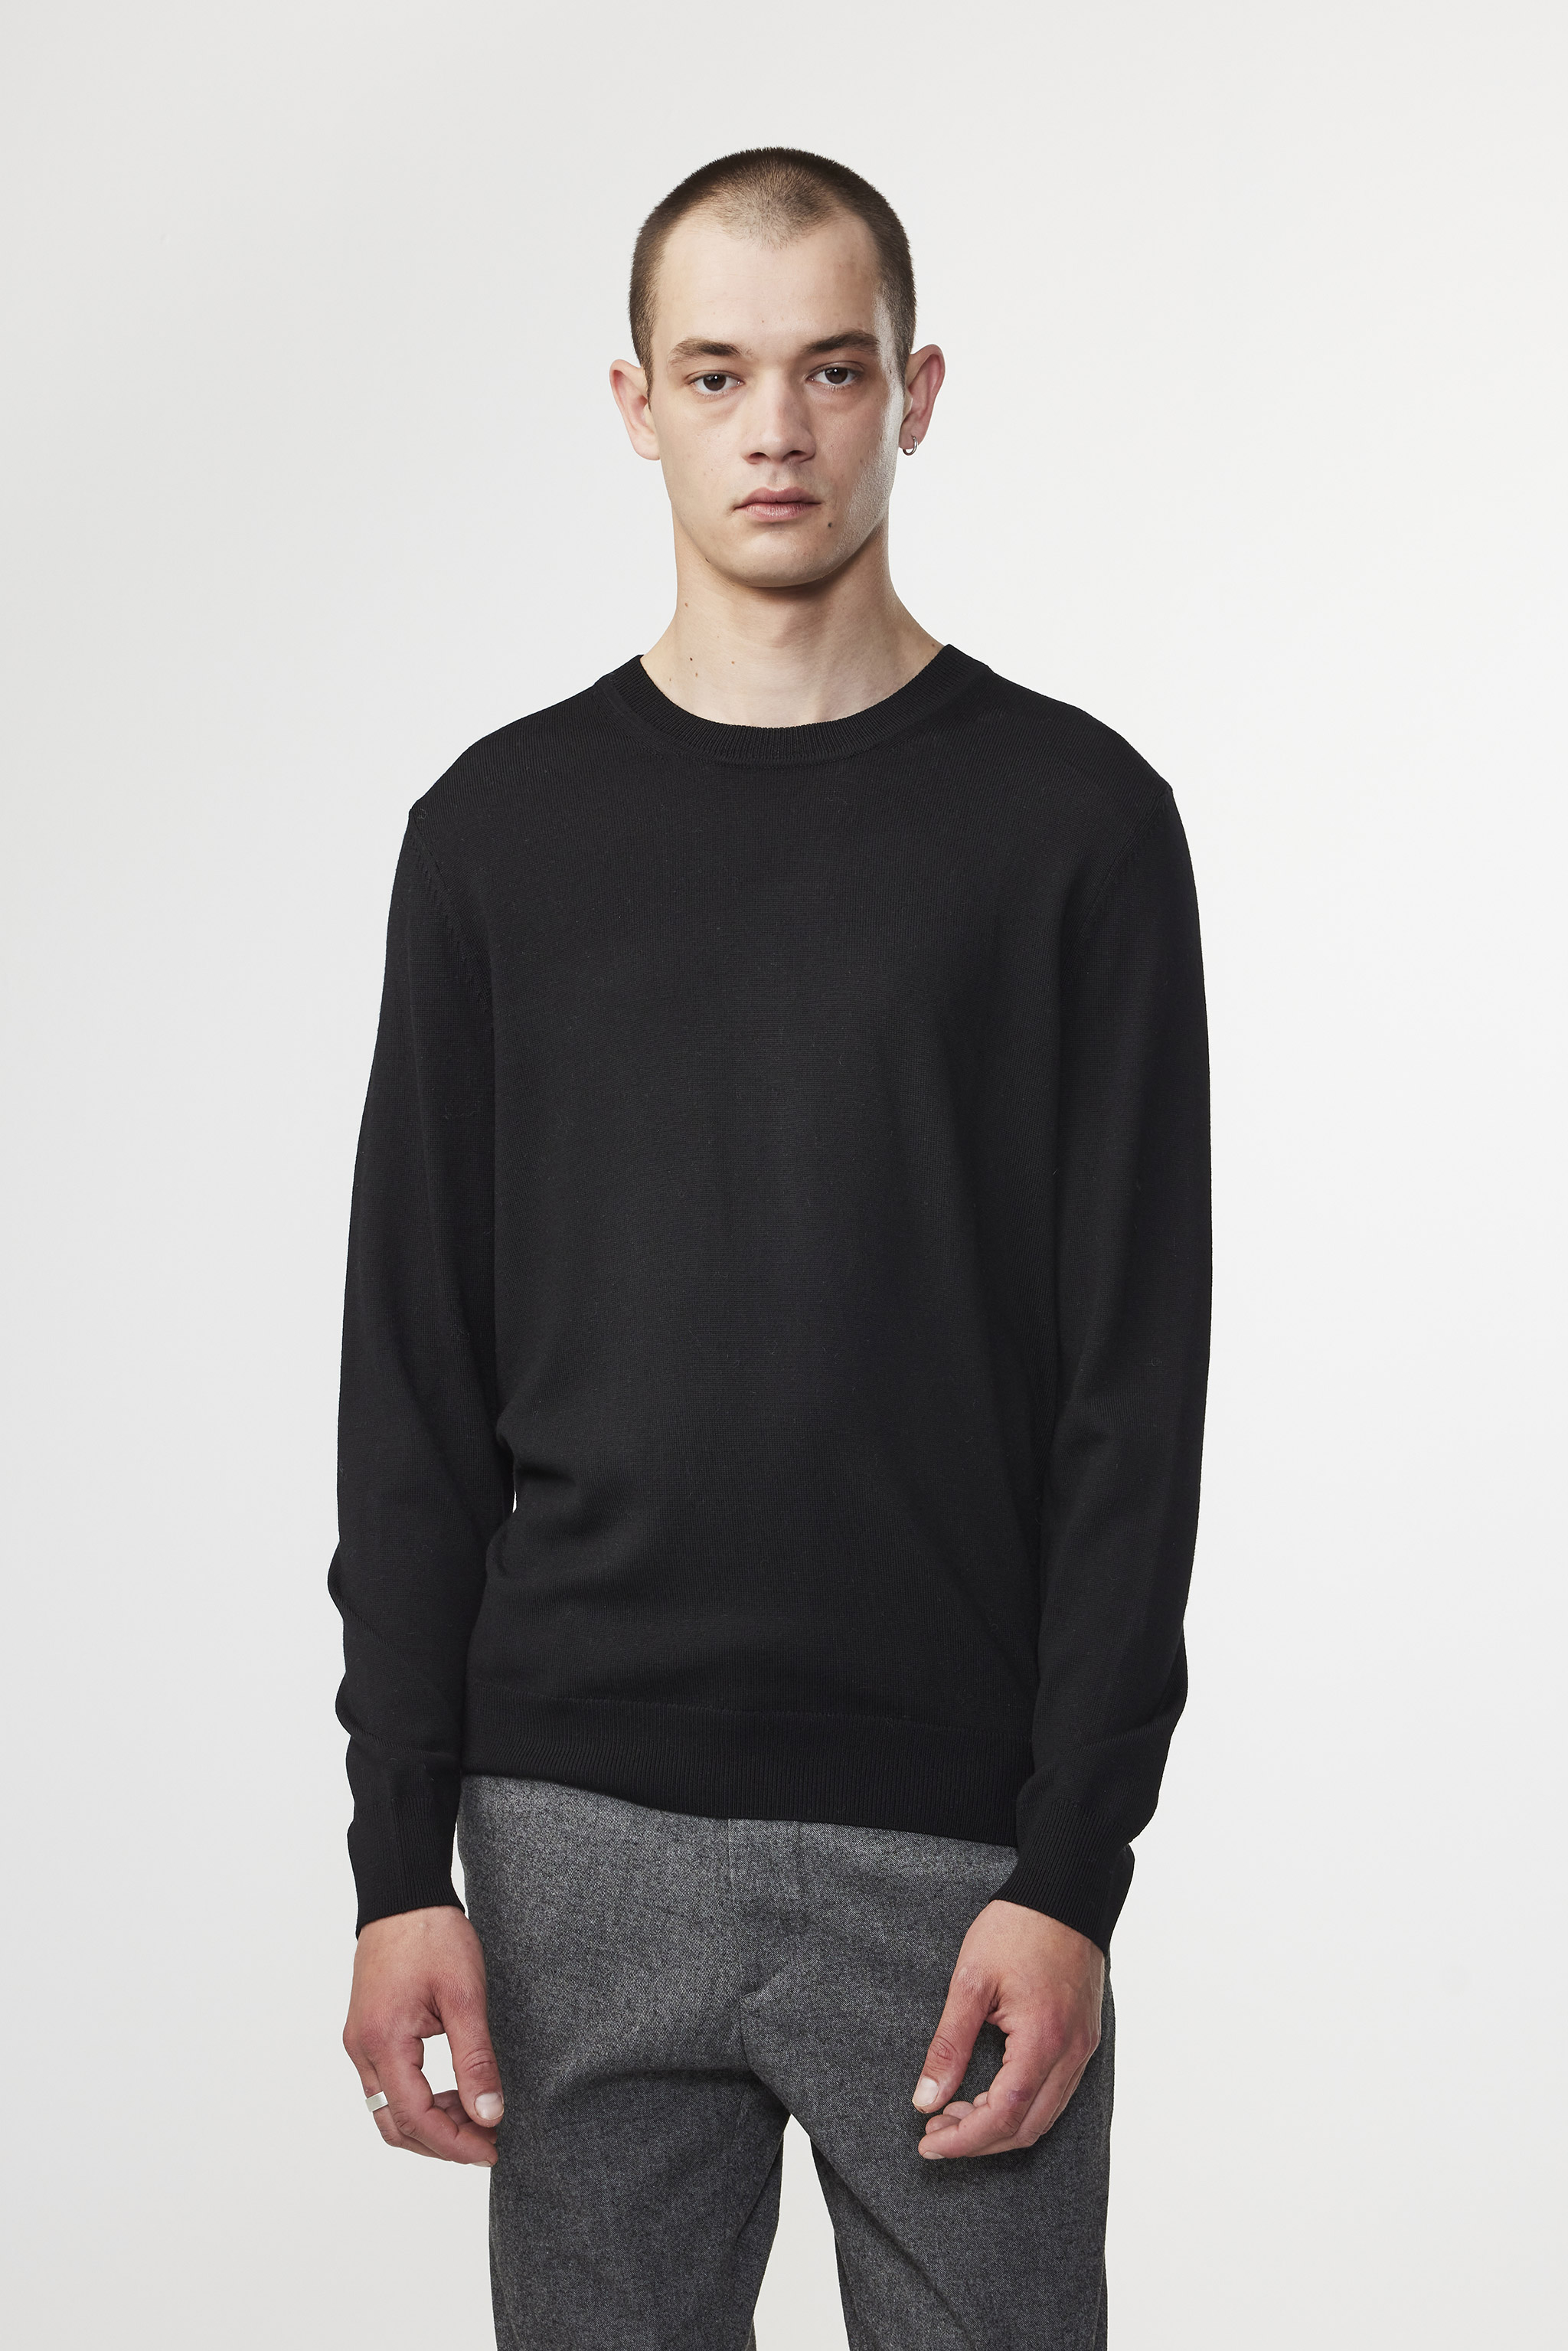 Ted 6605 men's sweater - Black - Buy online at NN.07®